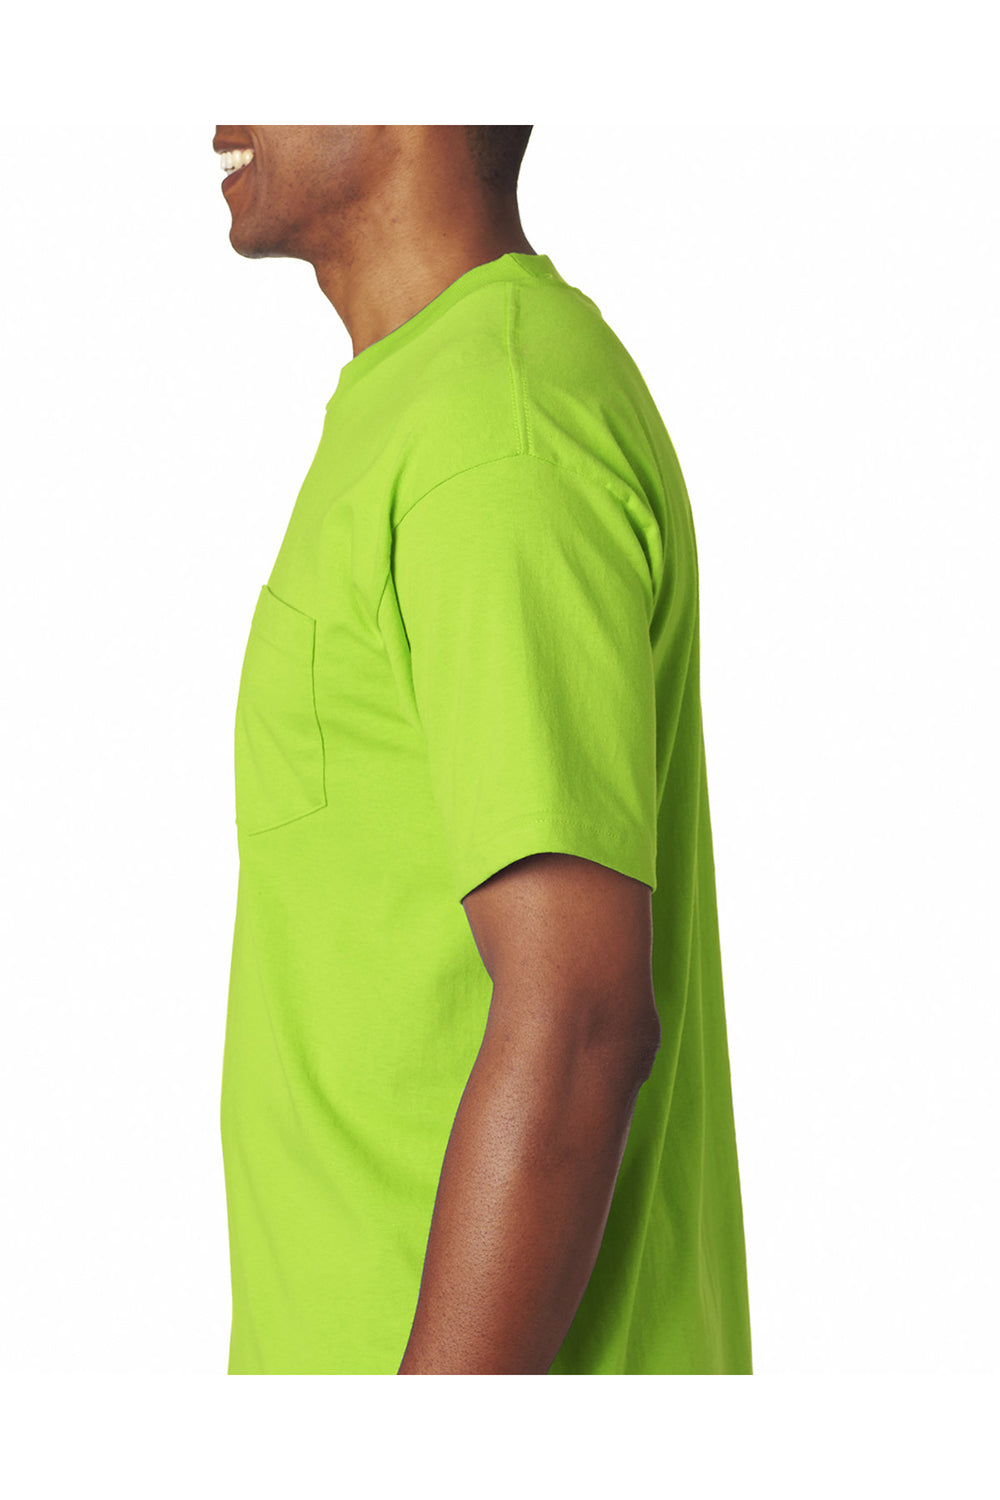 Bayside BA7100 Mens USA Made Short Sleeve Crewneck T-Shirt w/ Pocket Lime Green Model Side